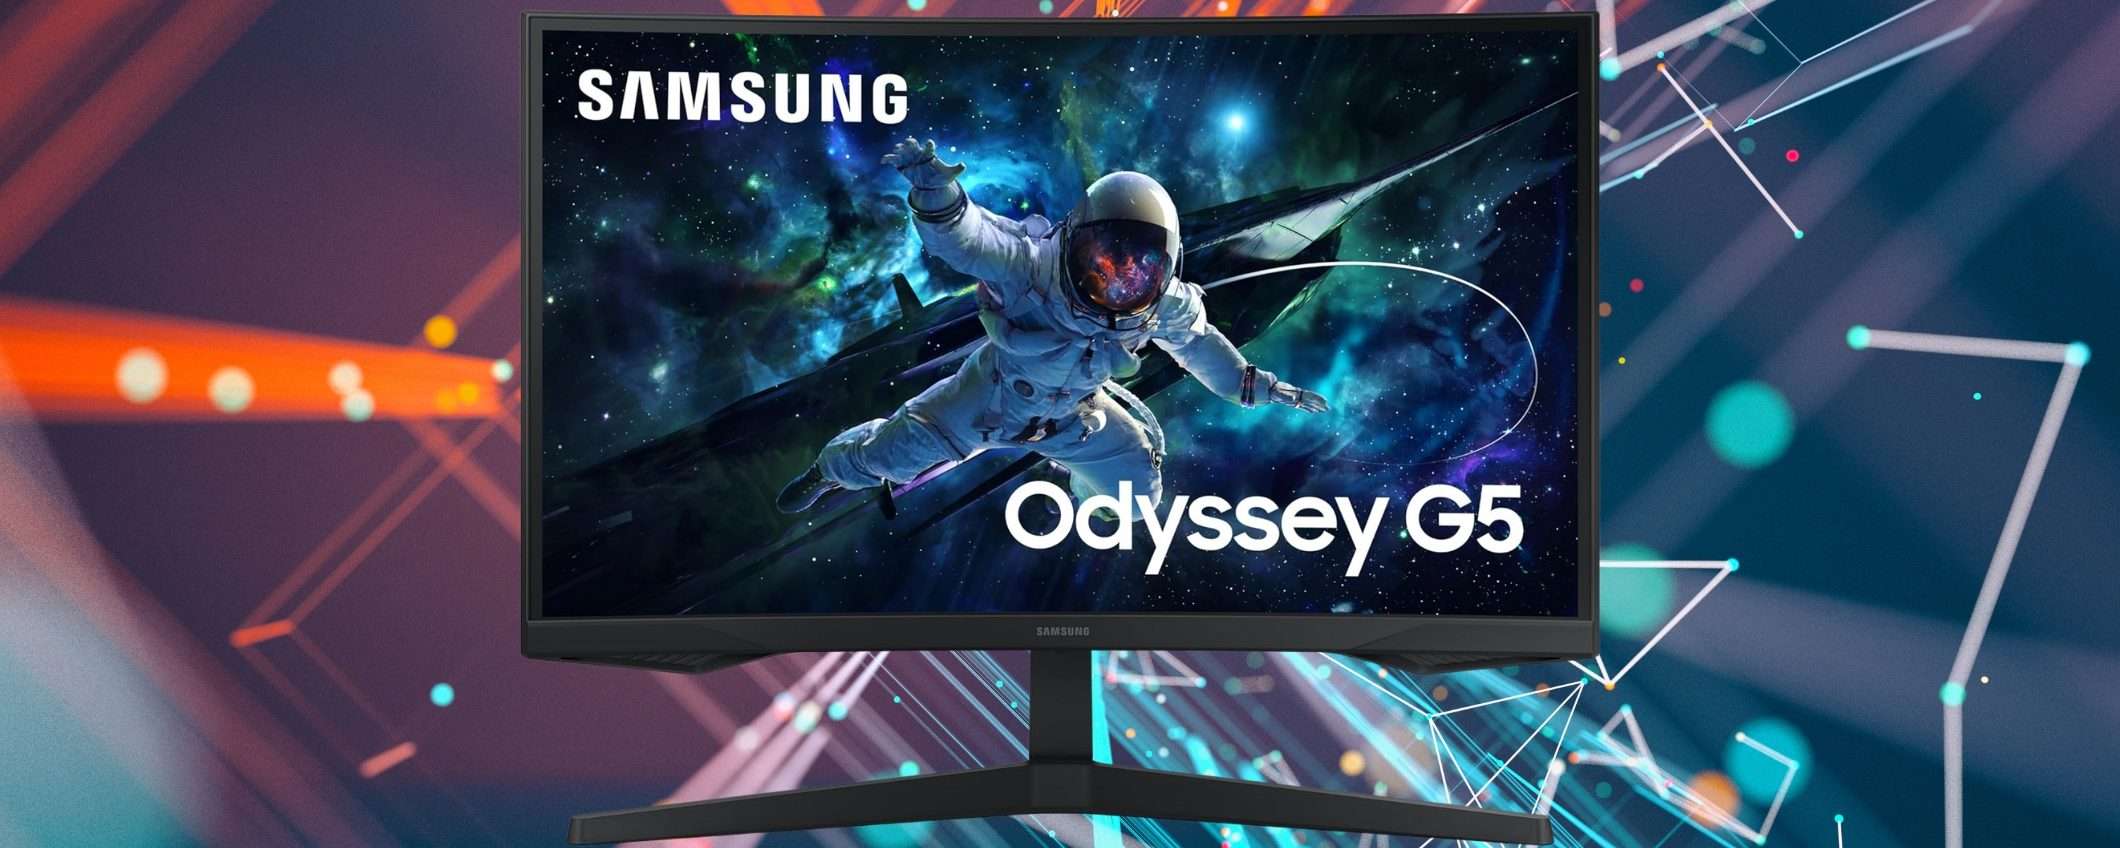 Samsung Odyssey G5 al MINIMO STORICO su Amazon (limitatissimo)